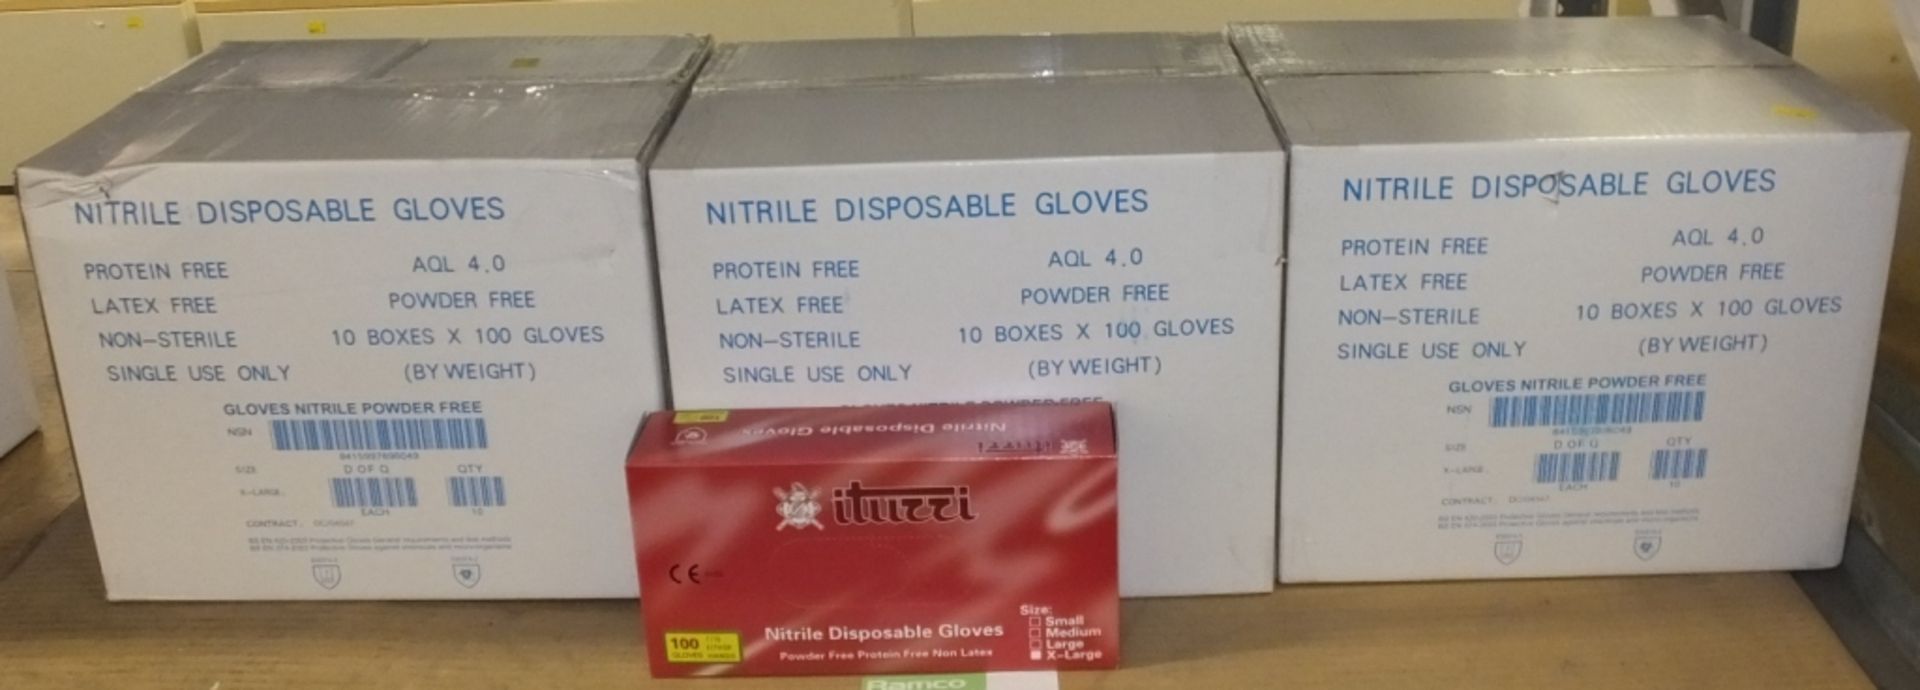 Nitrile disposable gloves - 10 boxes - 100 per box - 3 boxes